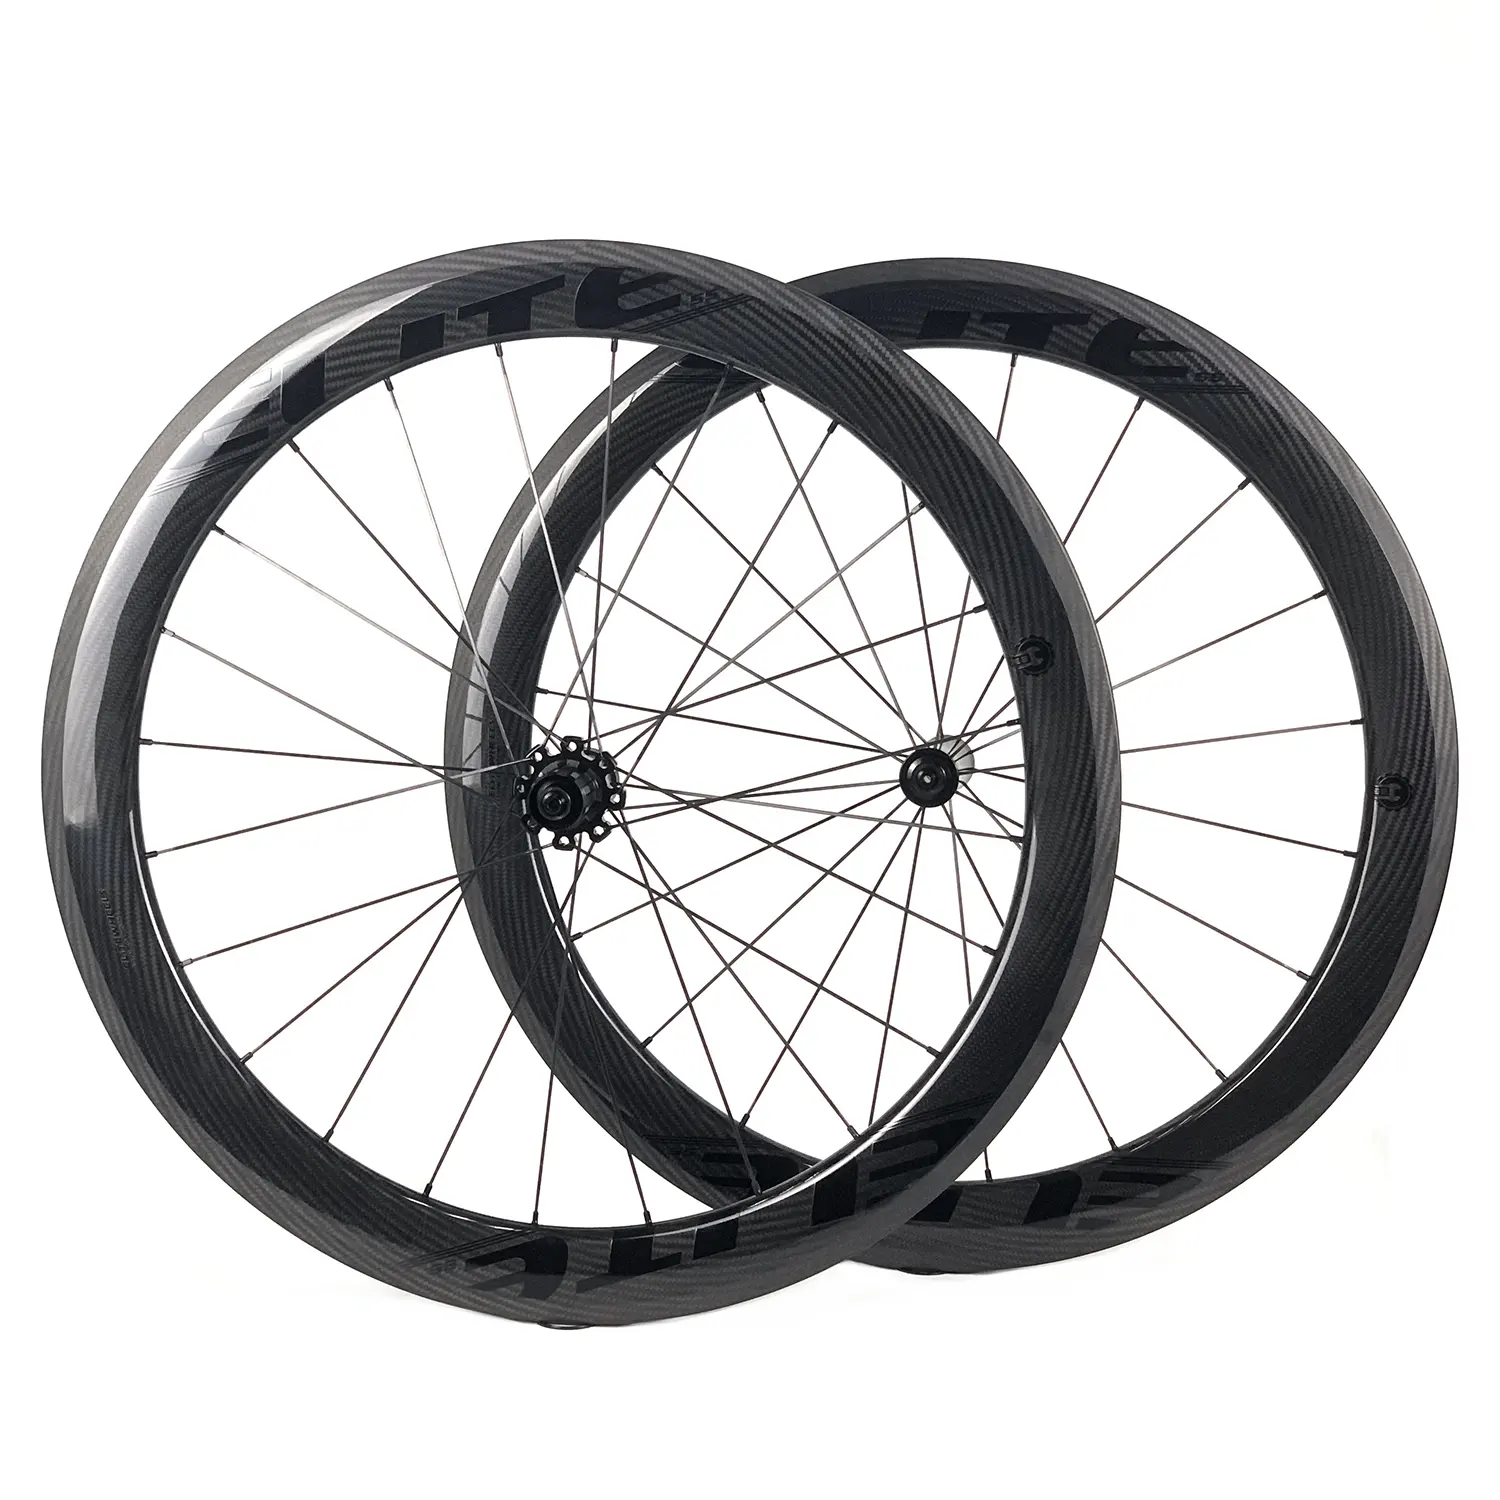 ELITEWHEELS ENT 700c Carbon Fiber Wheel set Cycling tubeless Carbon Wheels Road Bike Bicycle Wheelset